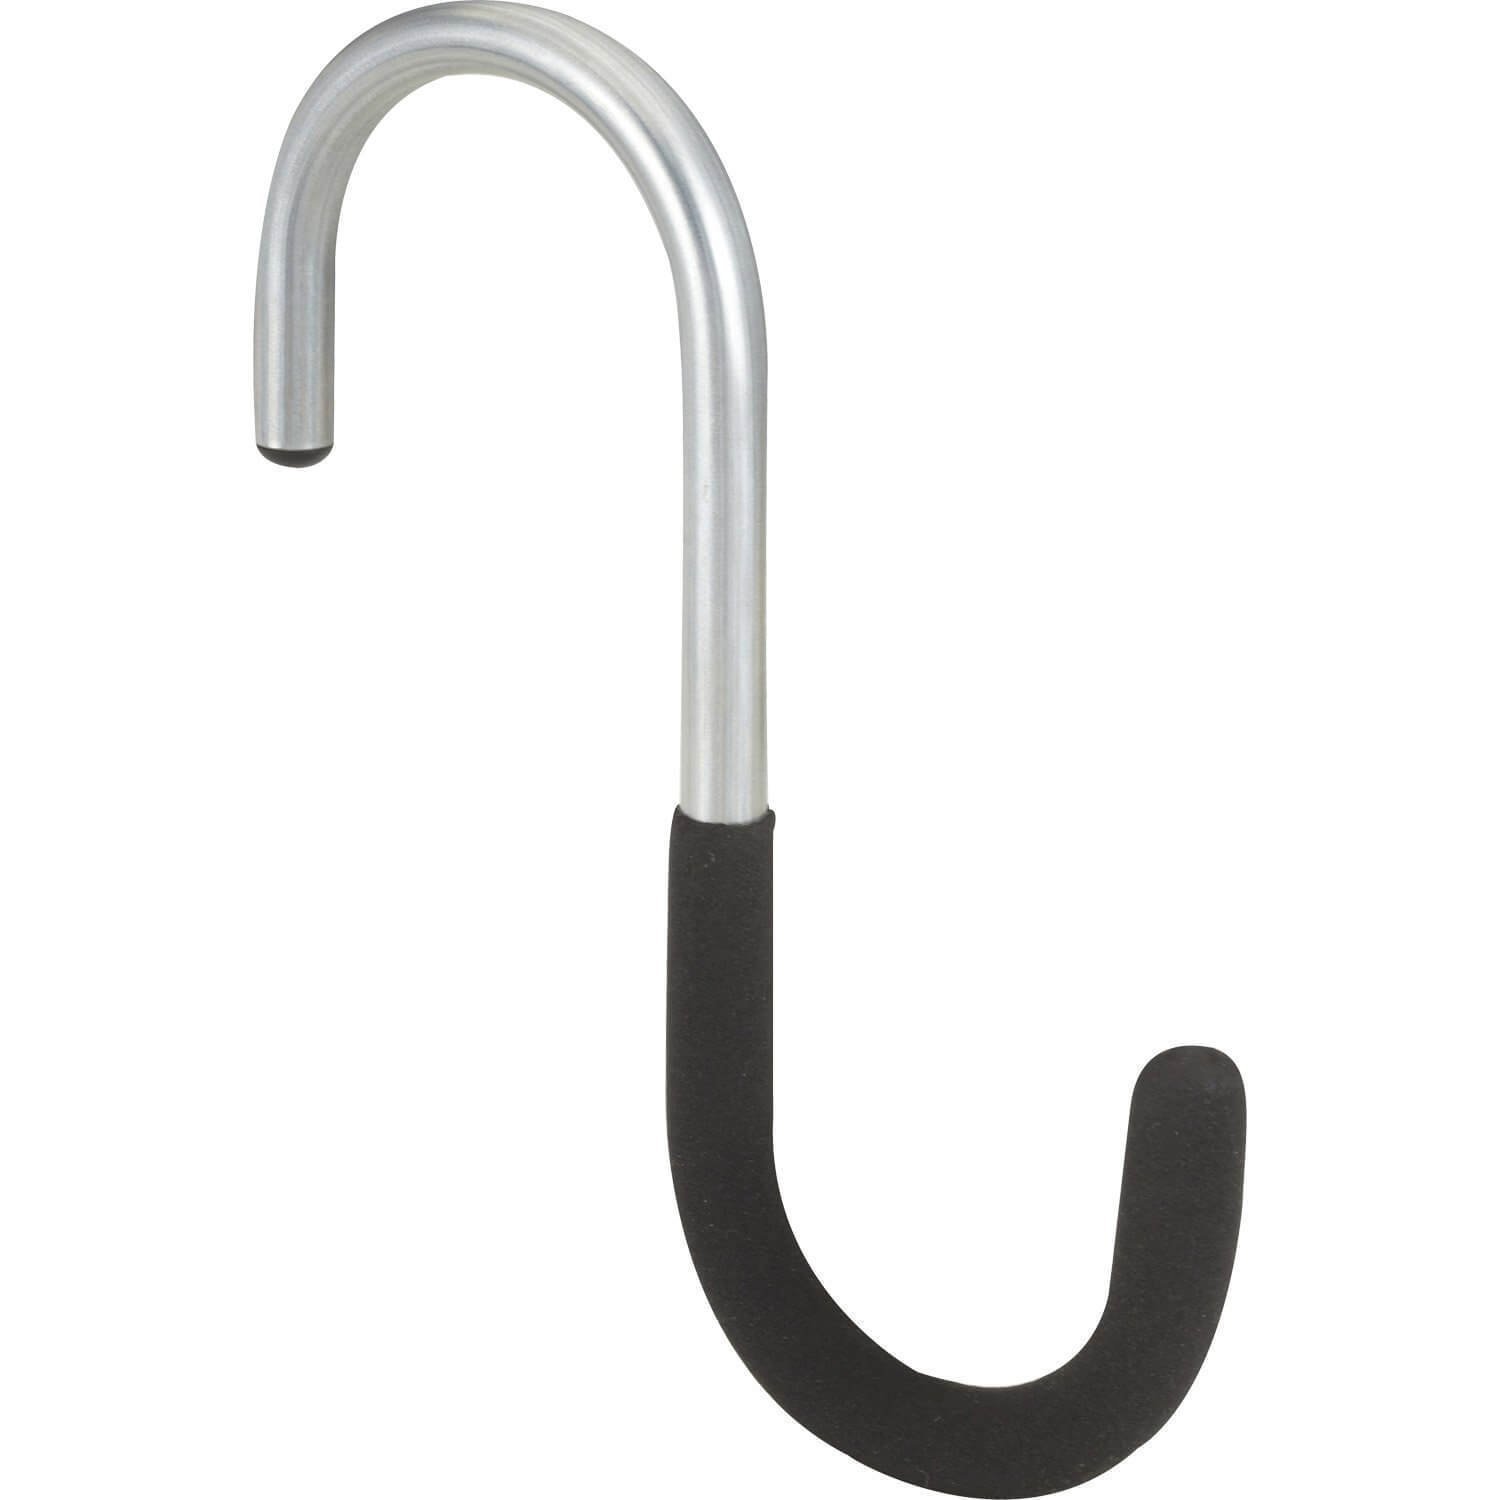 Universal S-shaped hooks